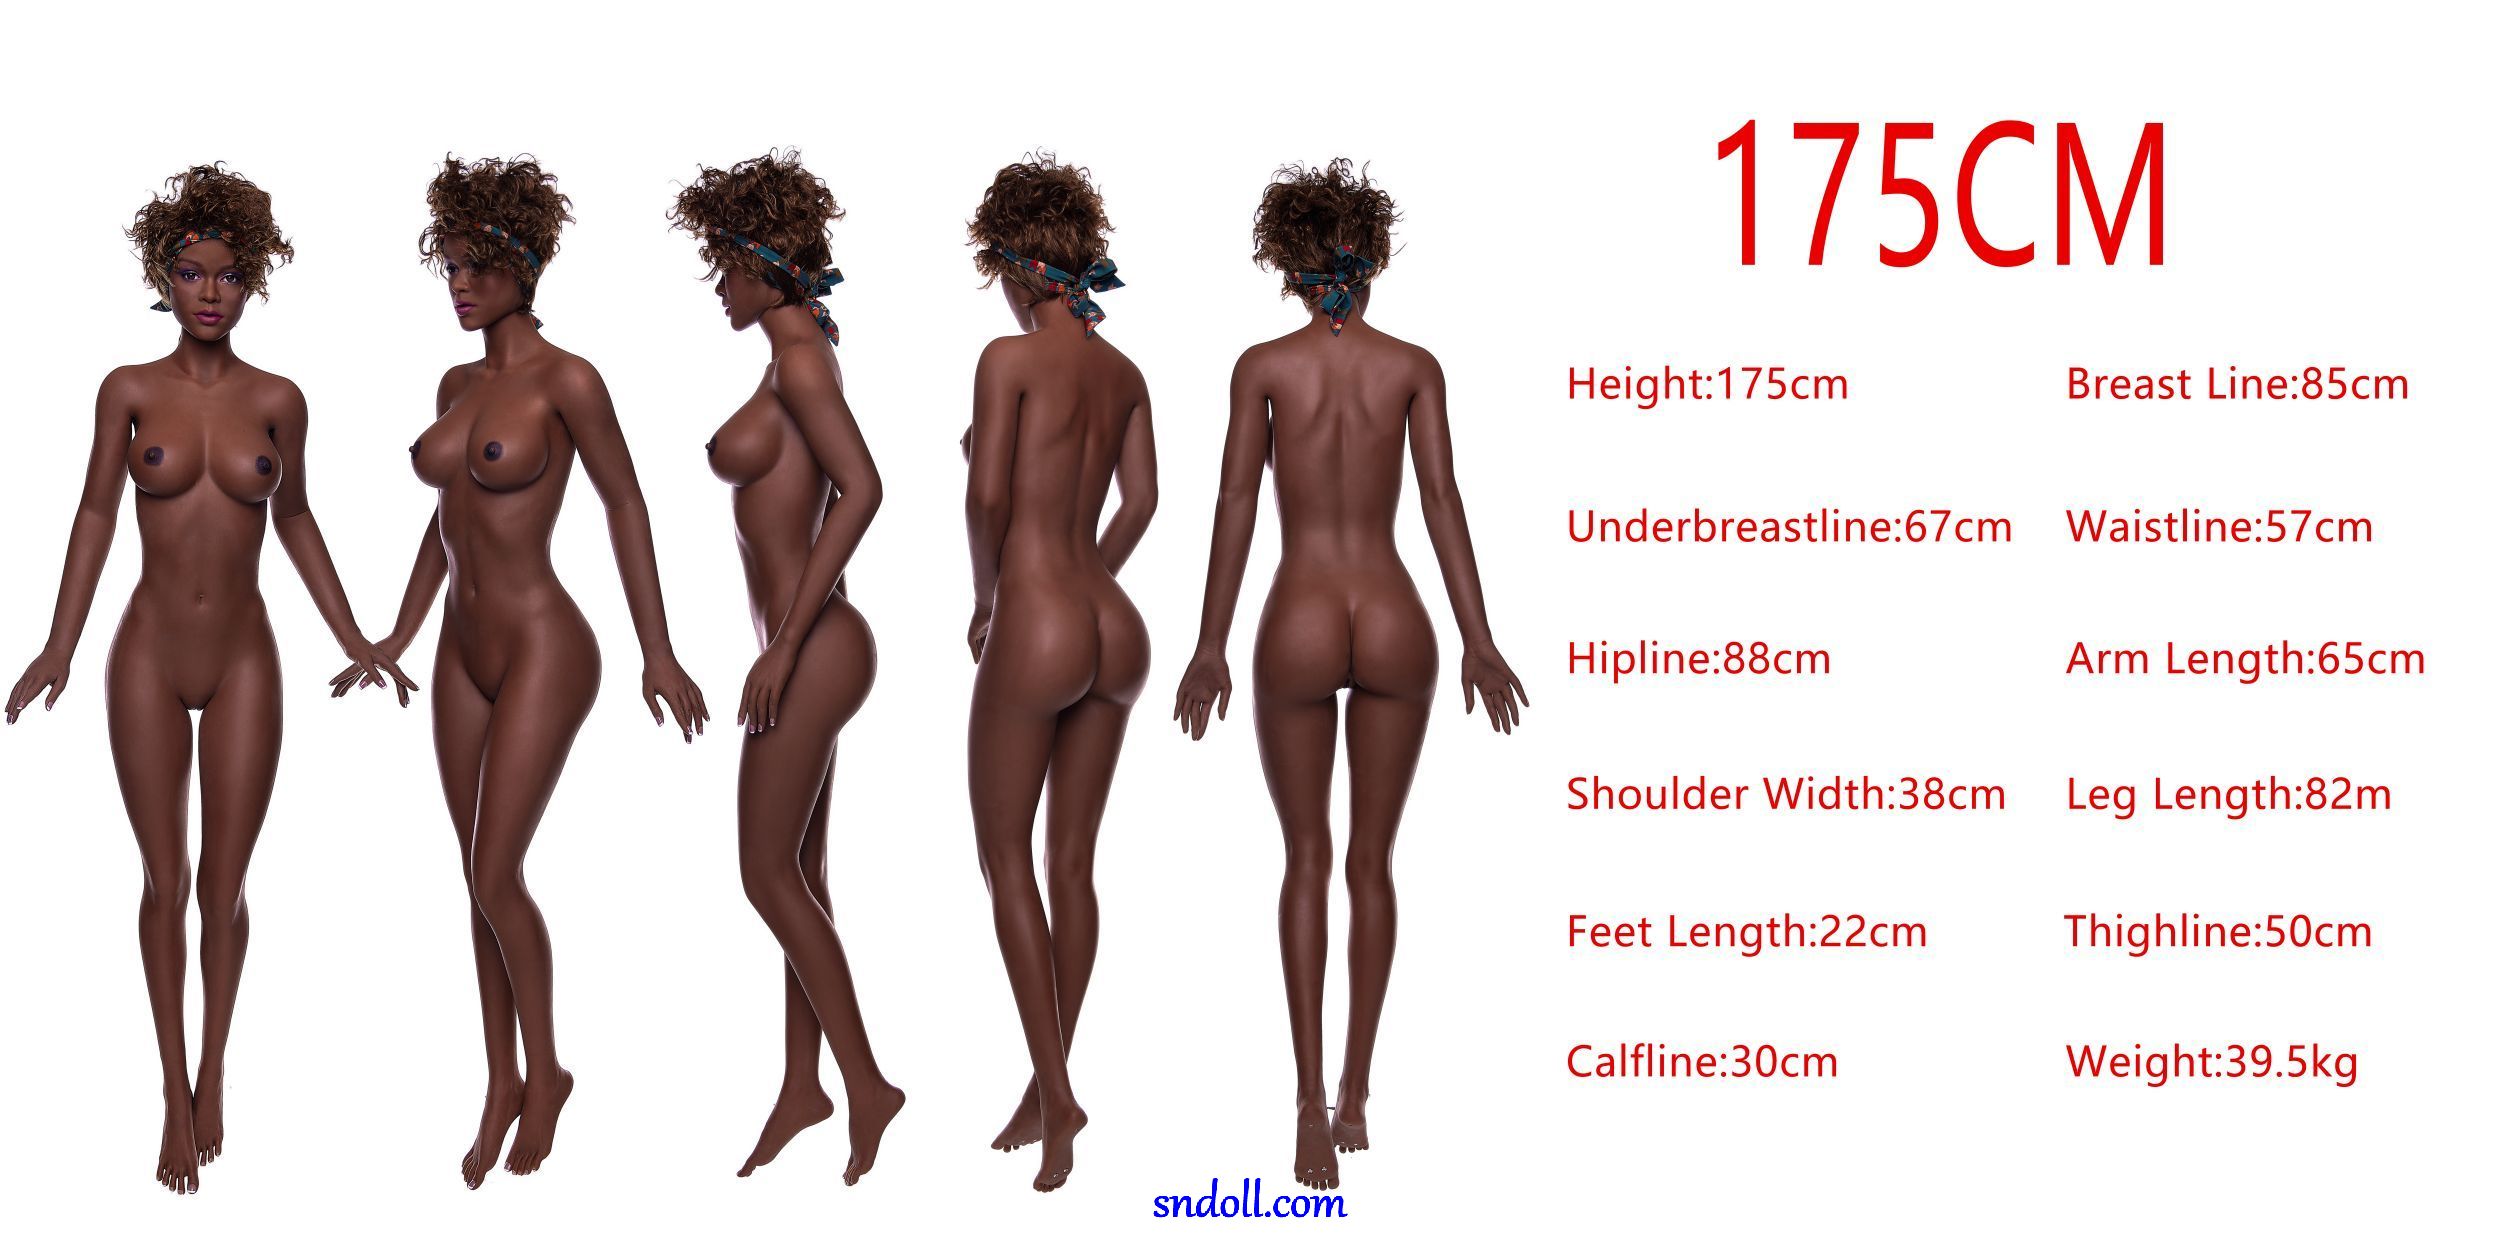 guide-irontech-tpe-body-175cm